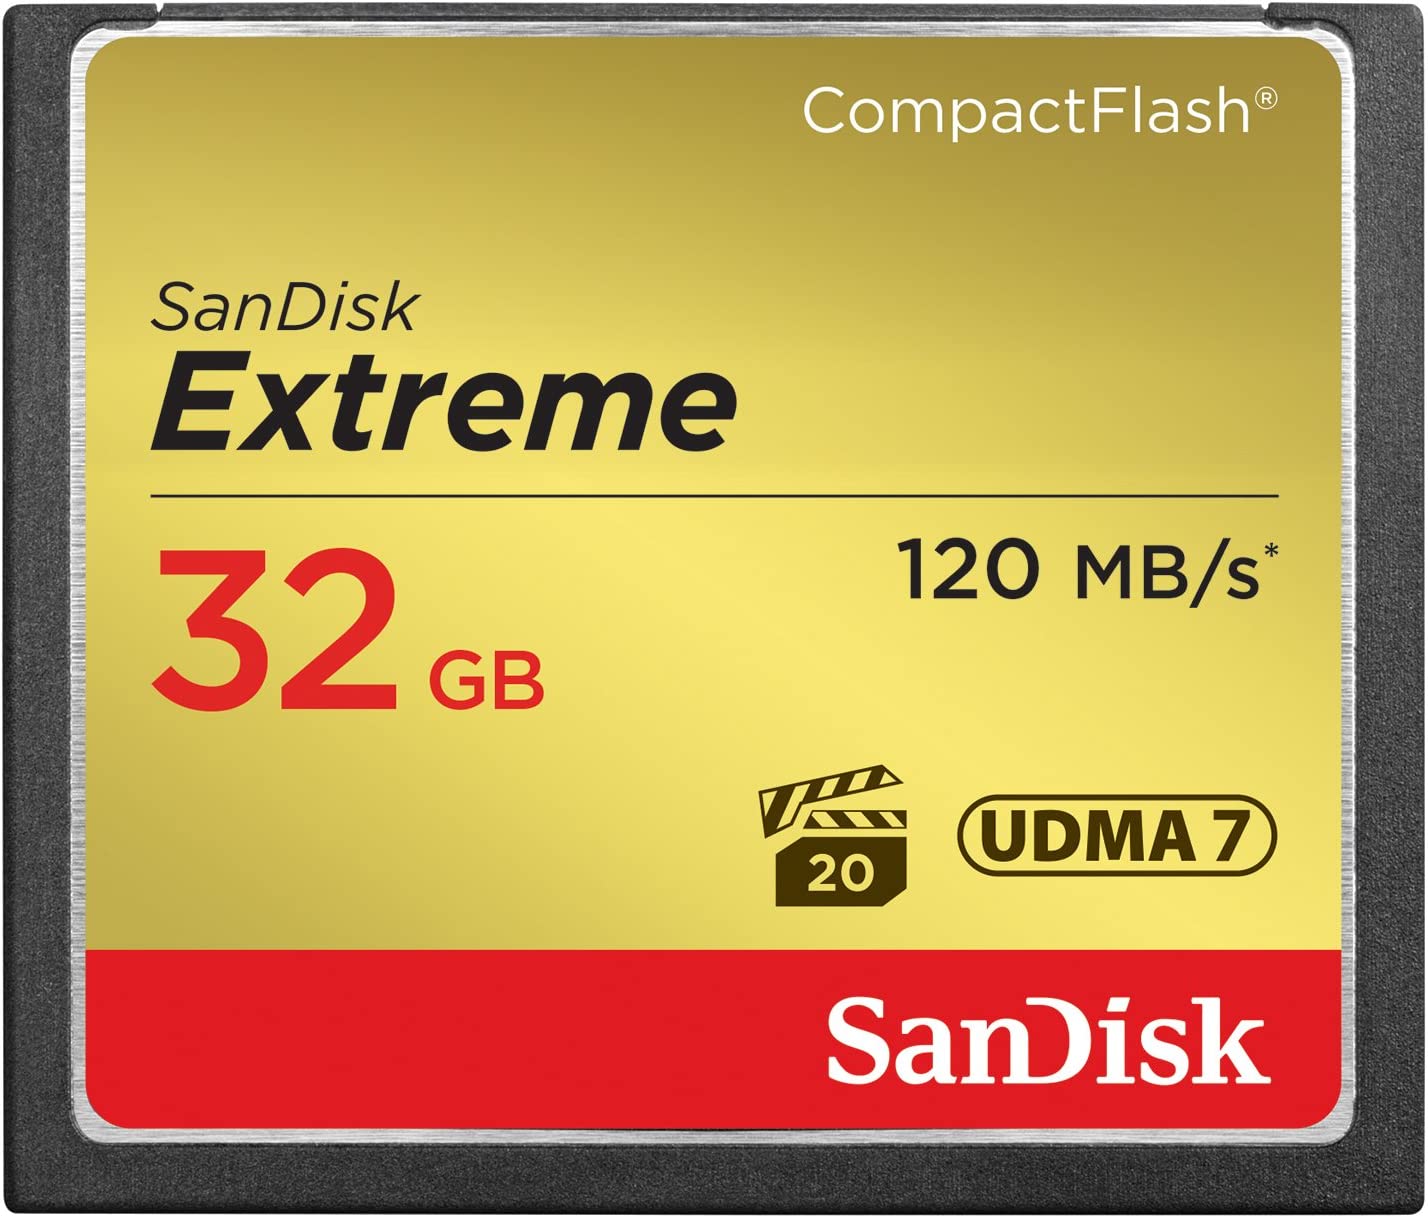 SanDisk 32GB Extreme CompactFlash 메모리 카드 UDMA 7 속도 최대 120MB/s - SDCFXSB-032G-G46